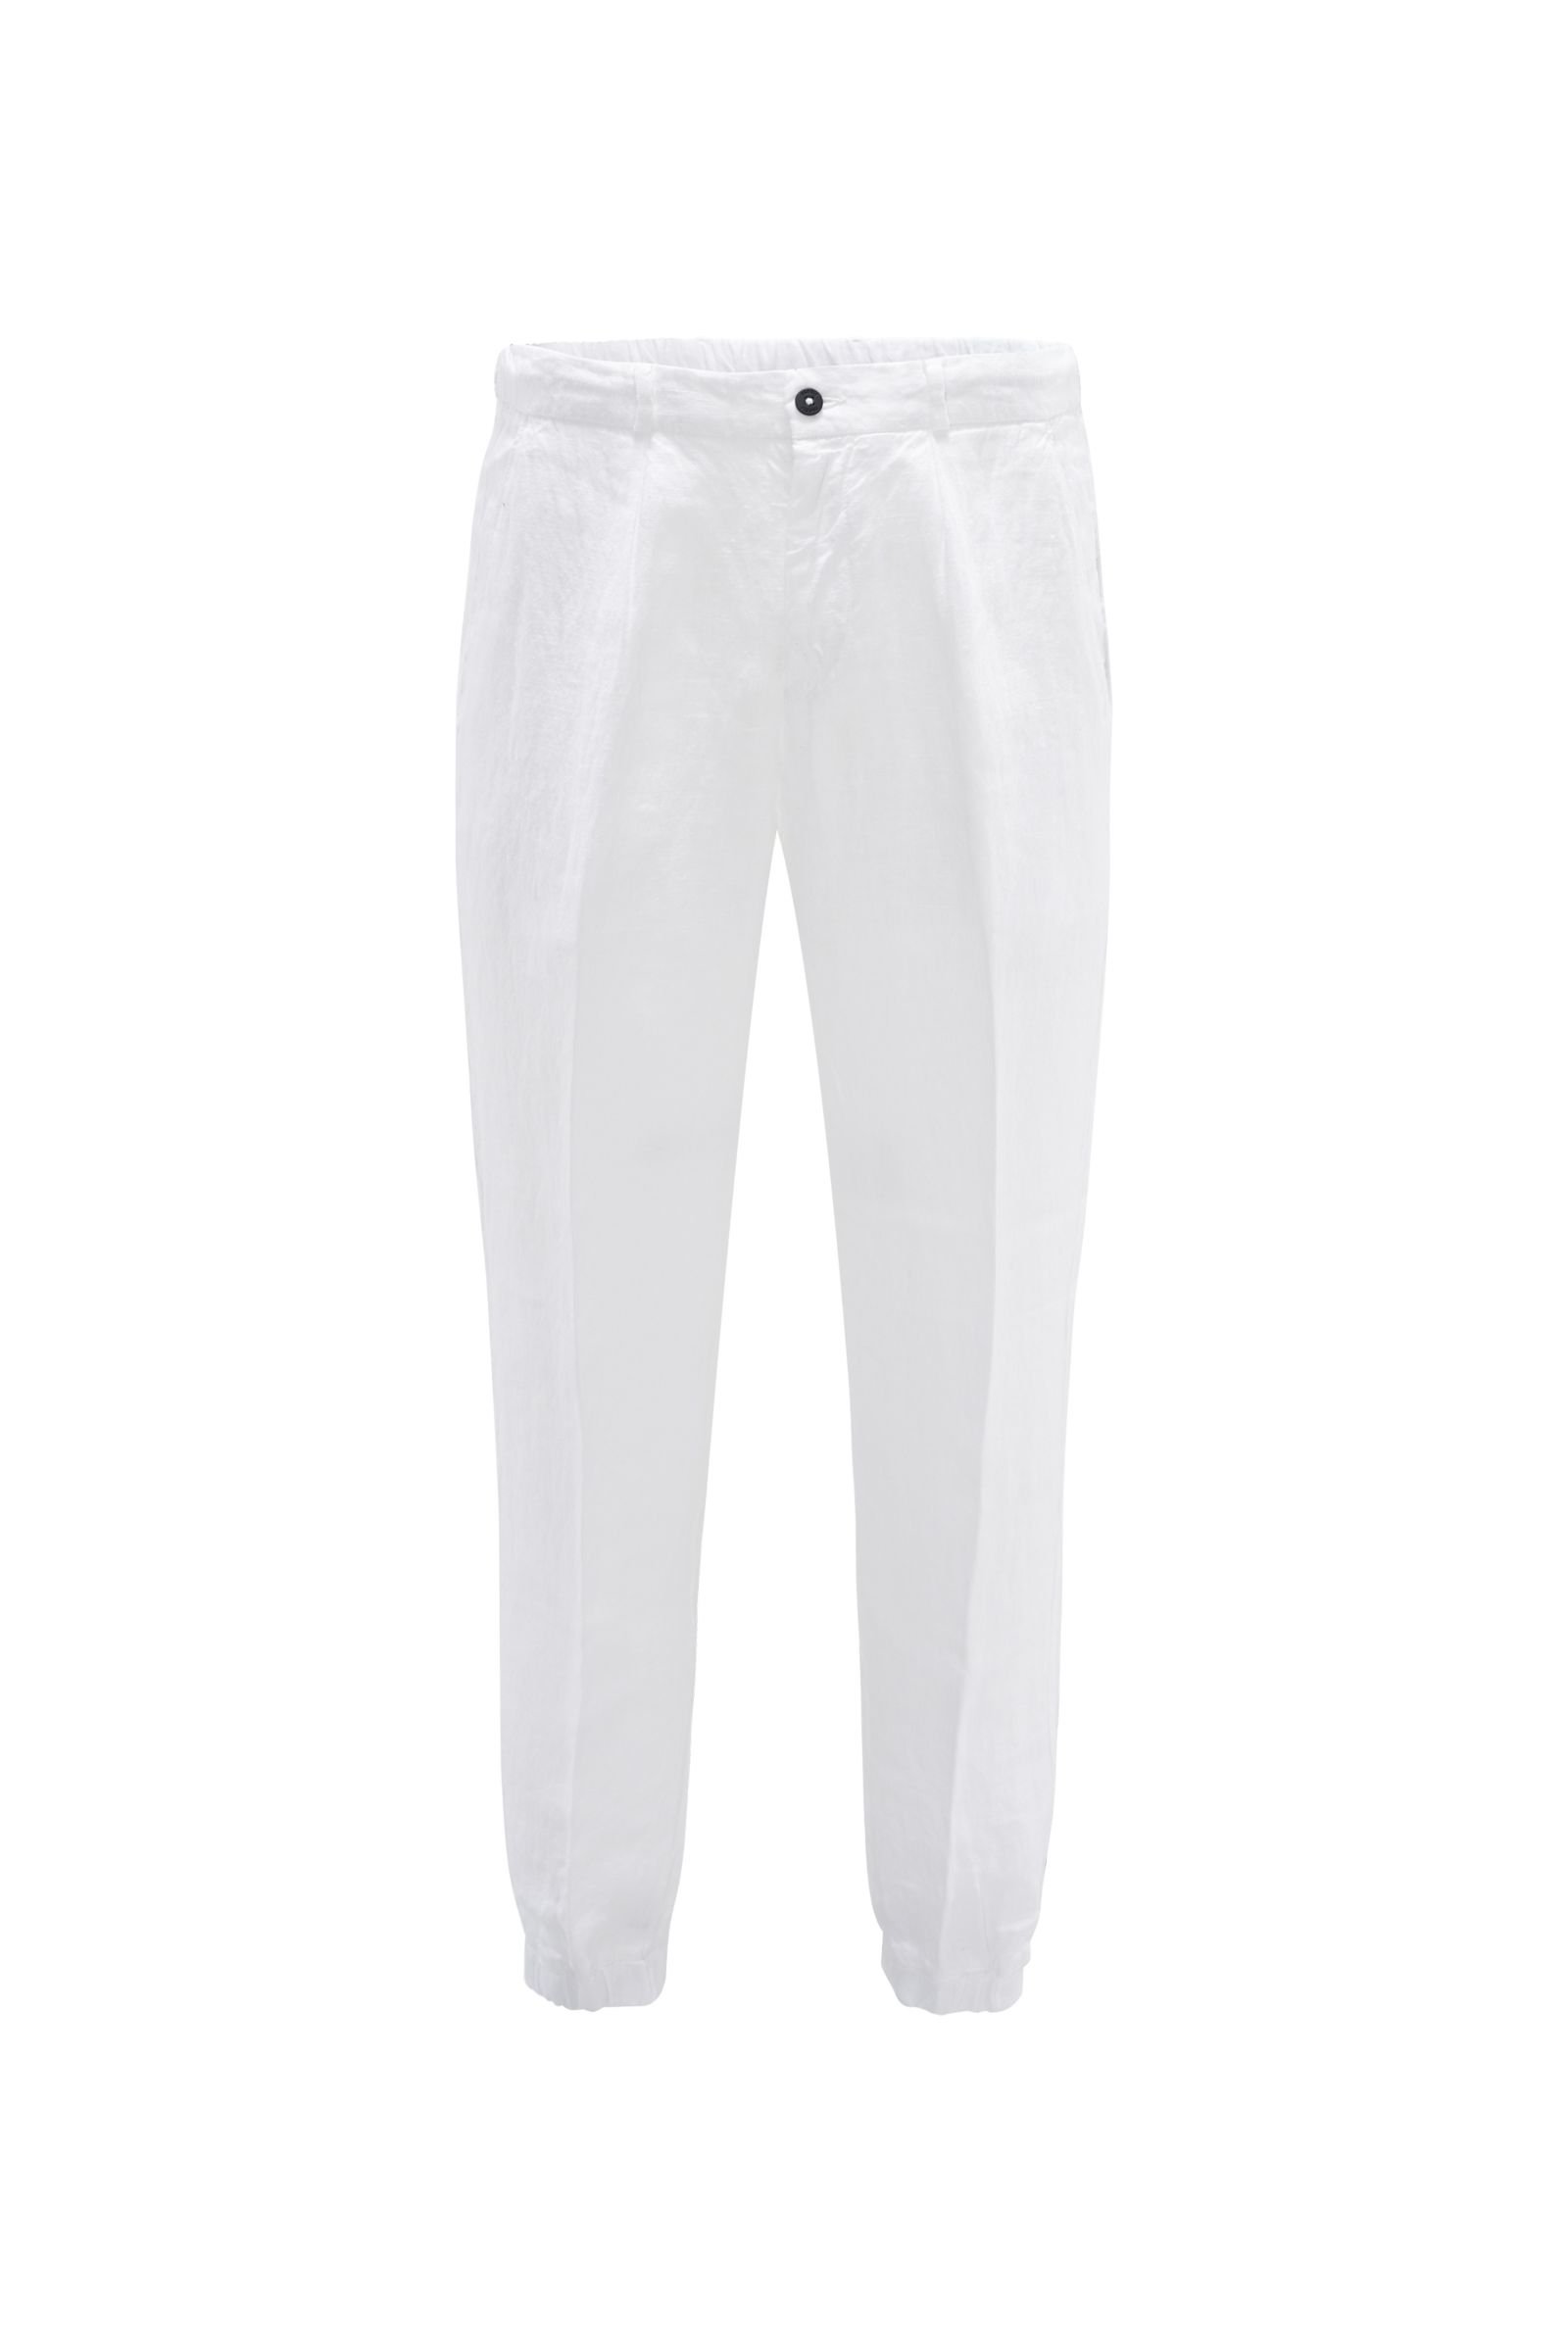 Linen jogger pants white